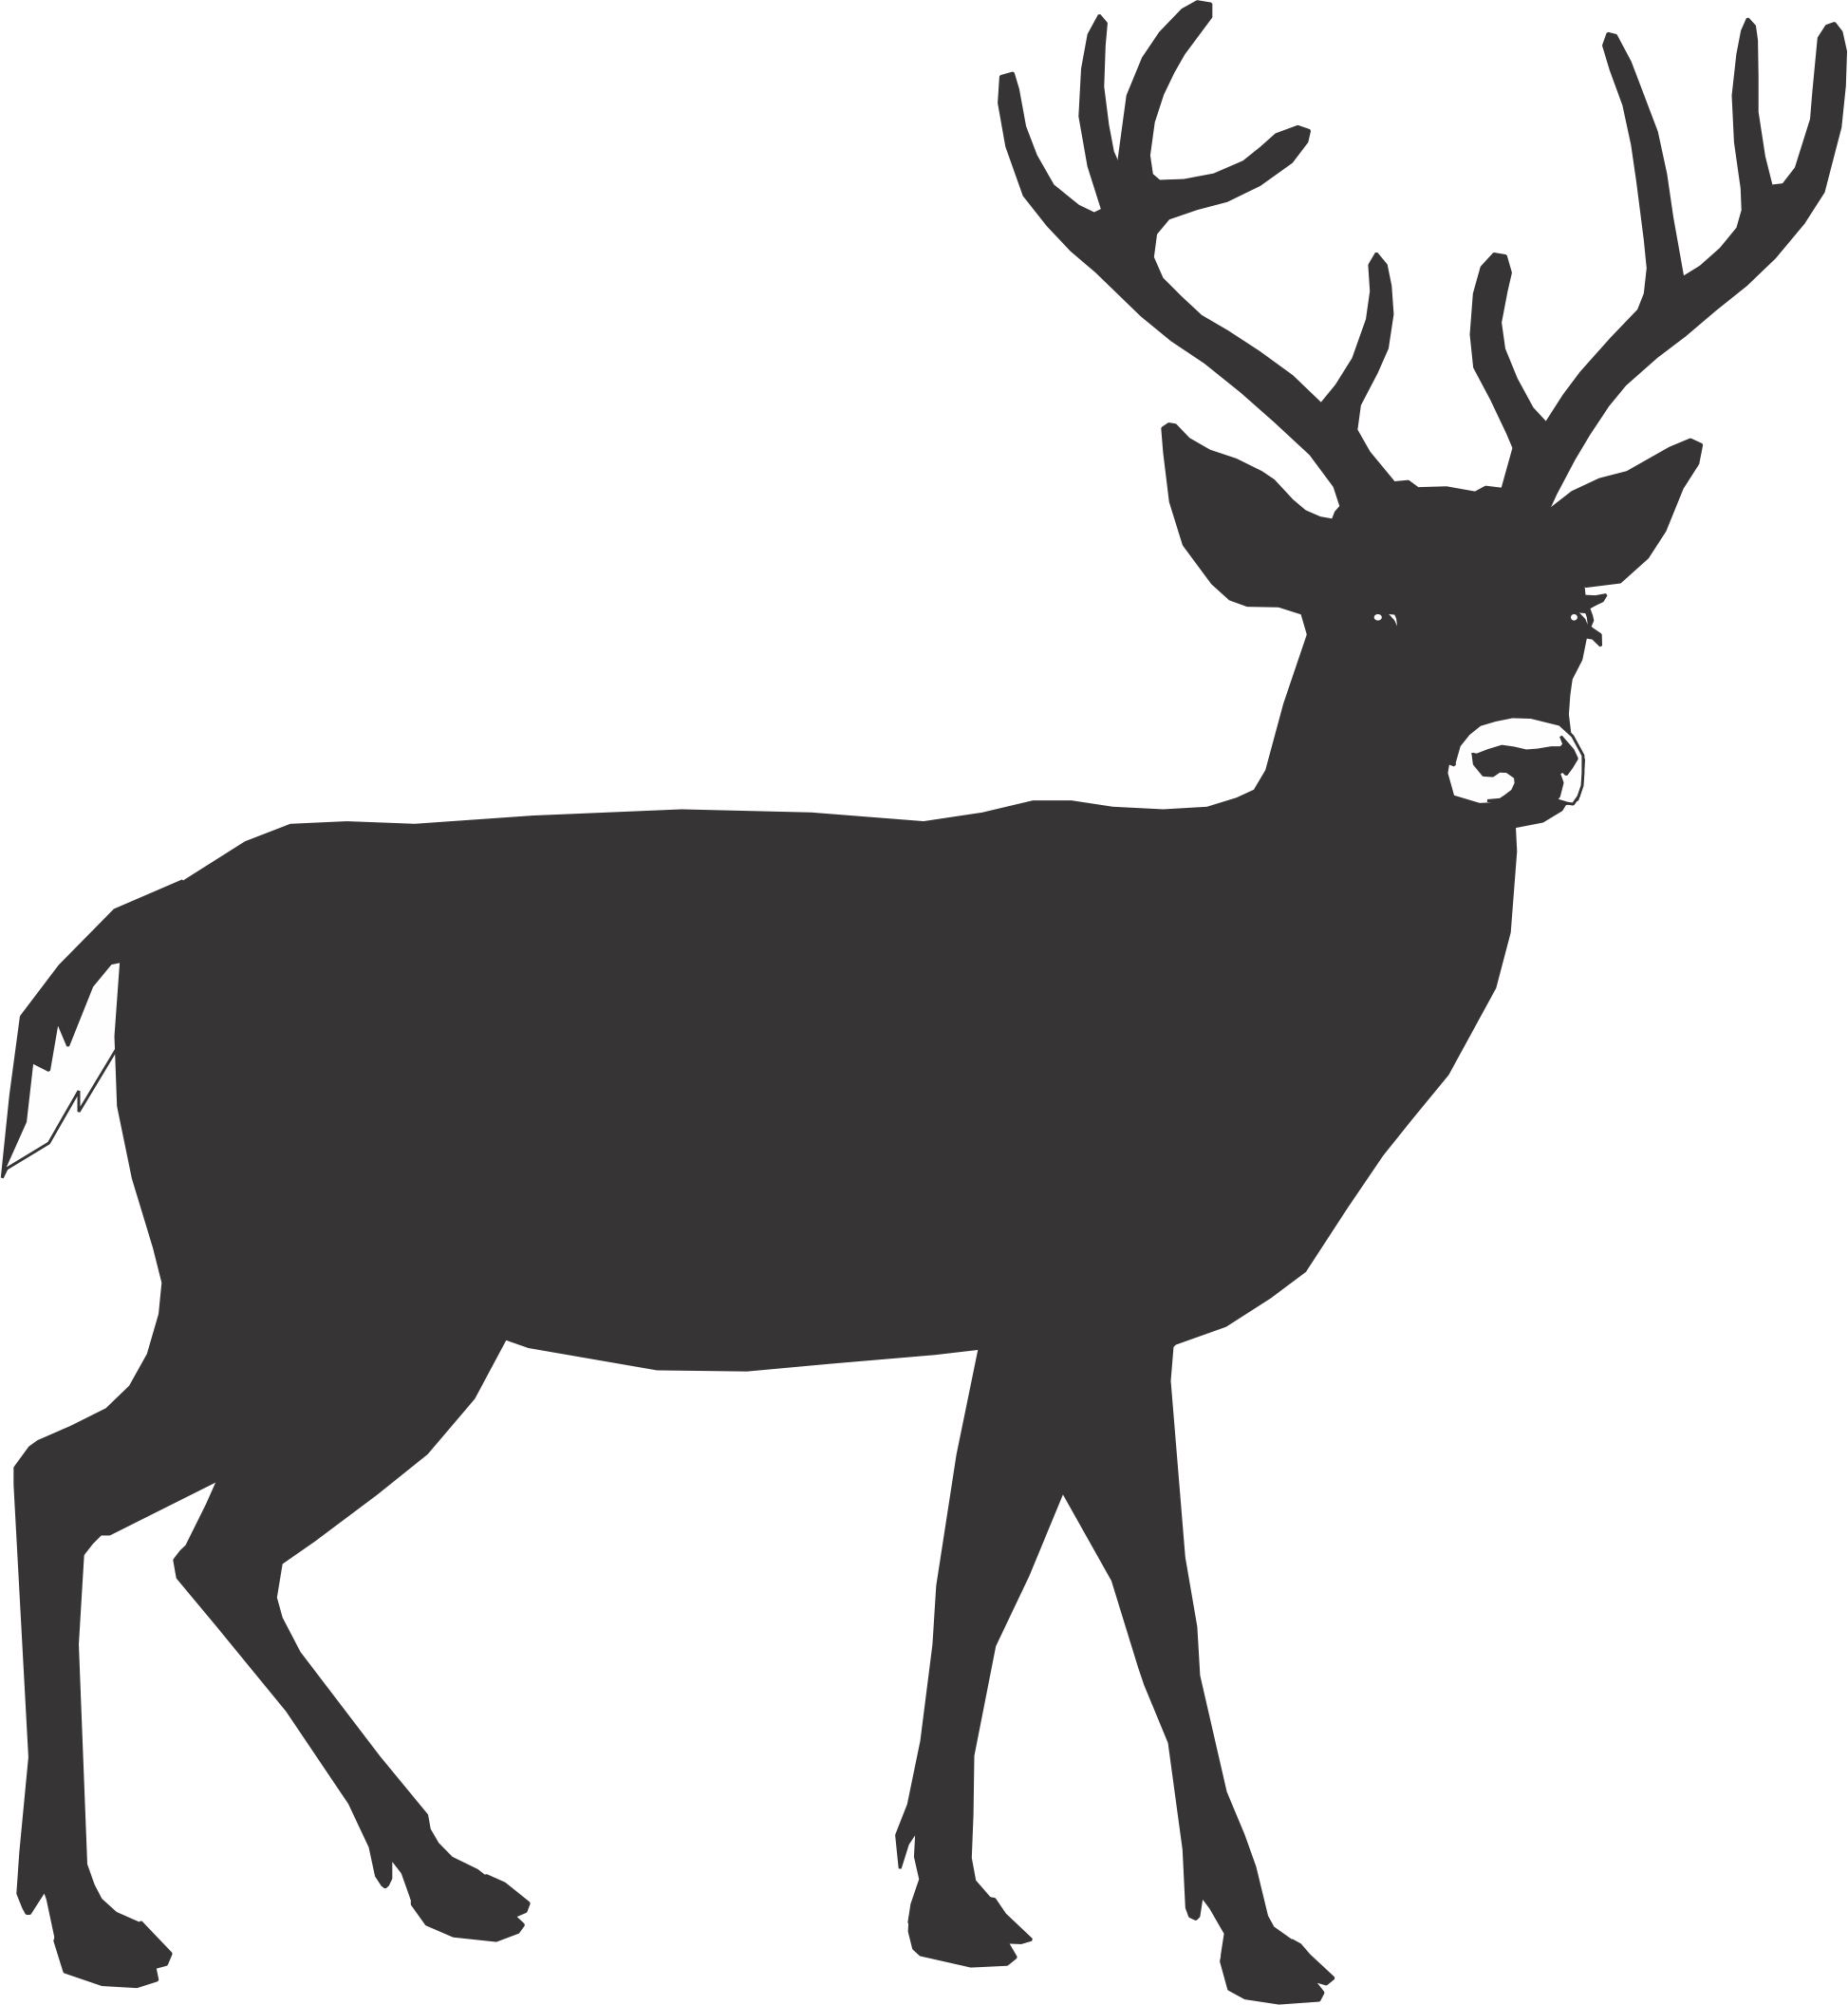 Cartoon reindeer head clipart black and white